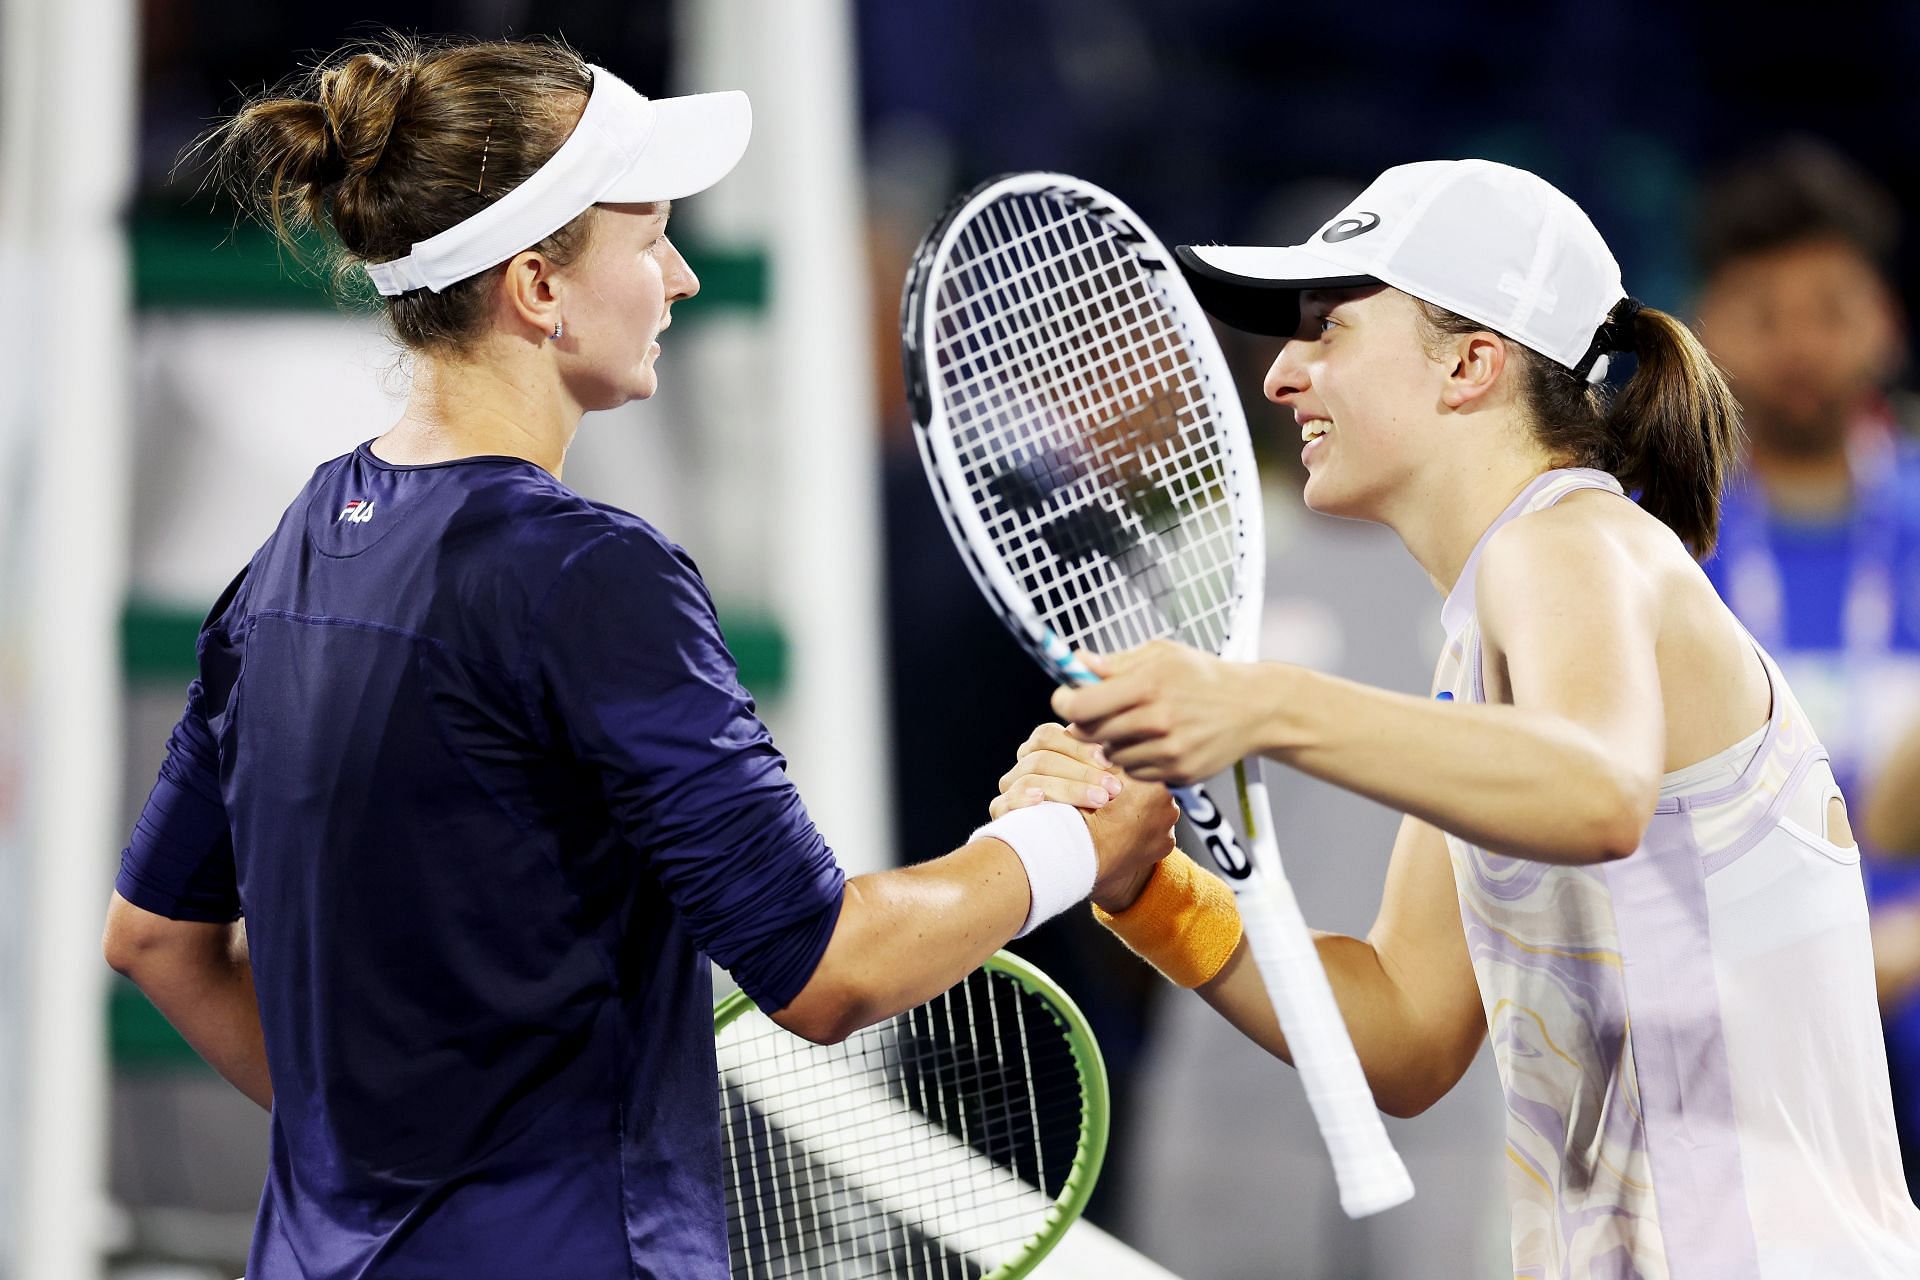 Dubai Tennis Championships 2023 prize money breakdown: How much will winner  Barbora Krejcikova and runner-up Iga Swiatek earn?